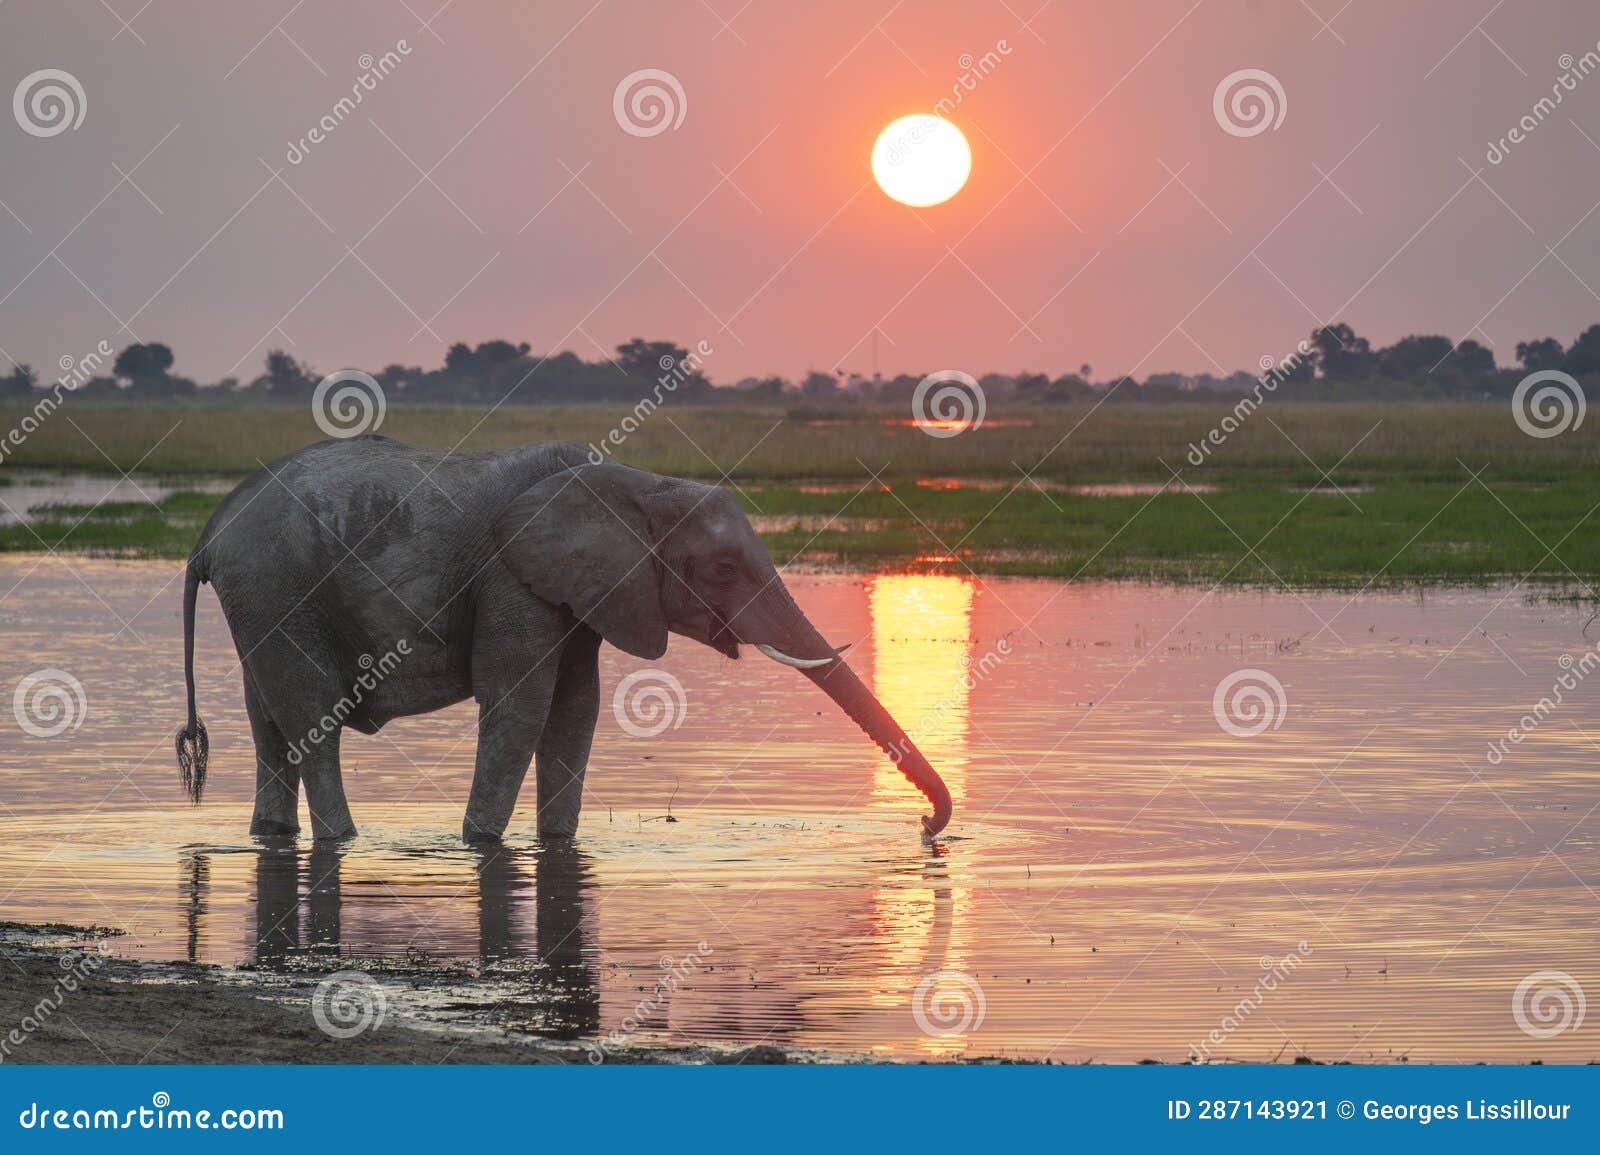 elephant in sunset chobe river